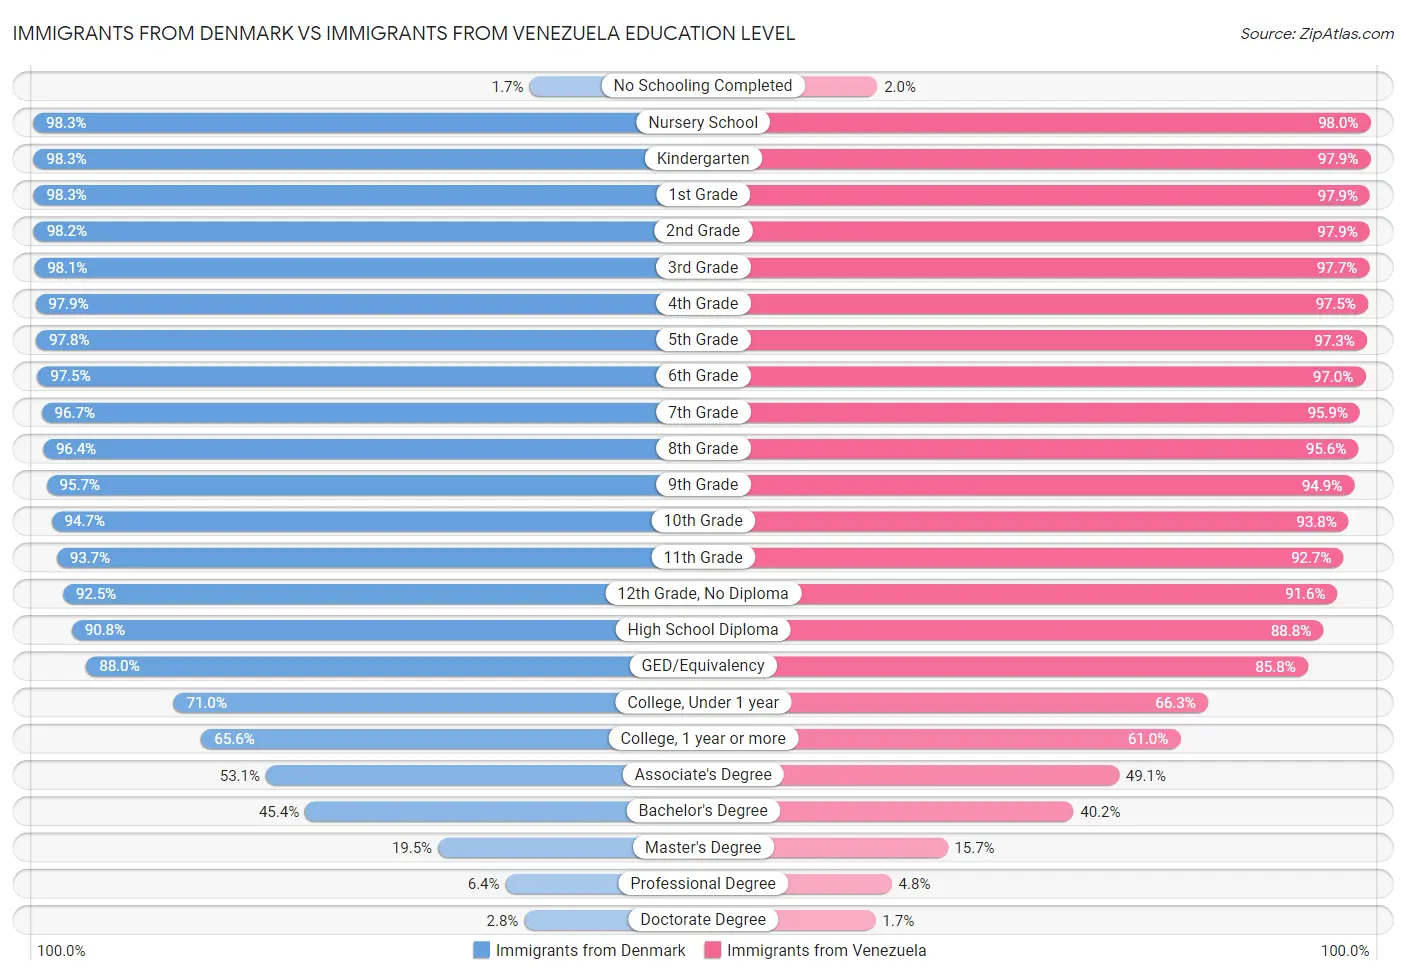 Immigrants from Denmark vs Immigrants from Venezuela Education Level